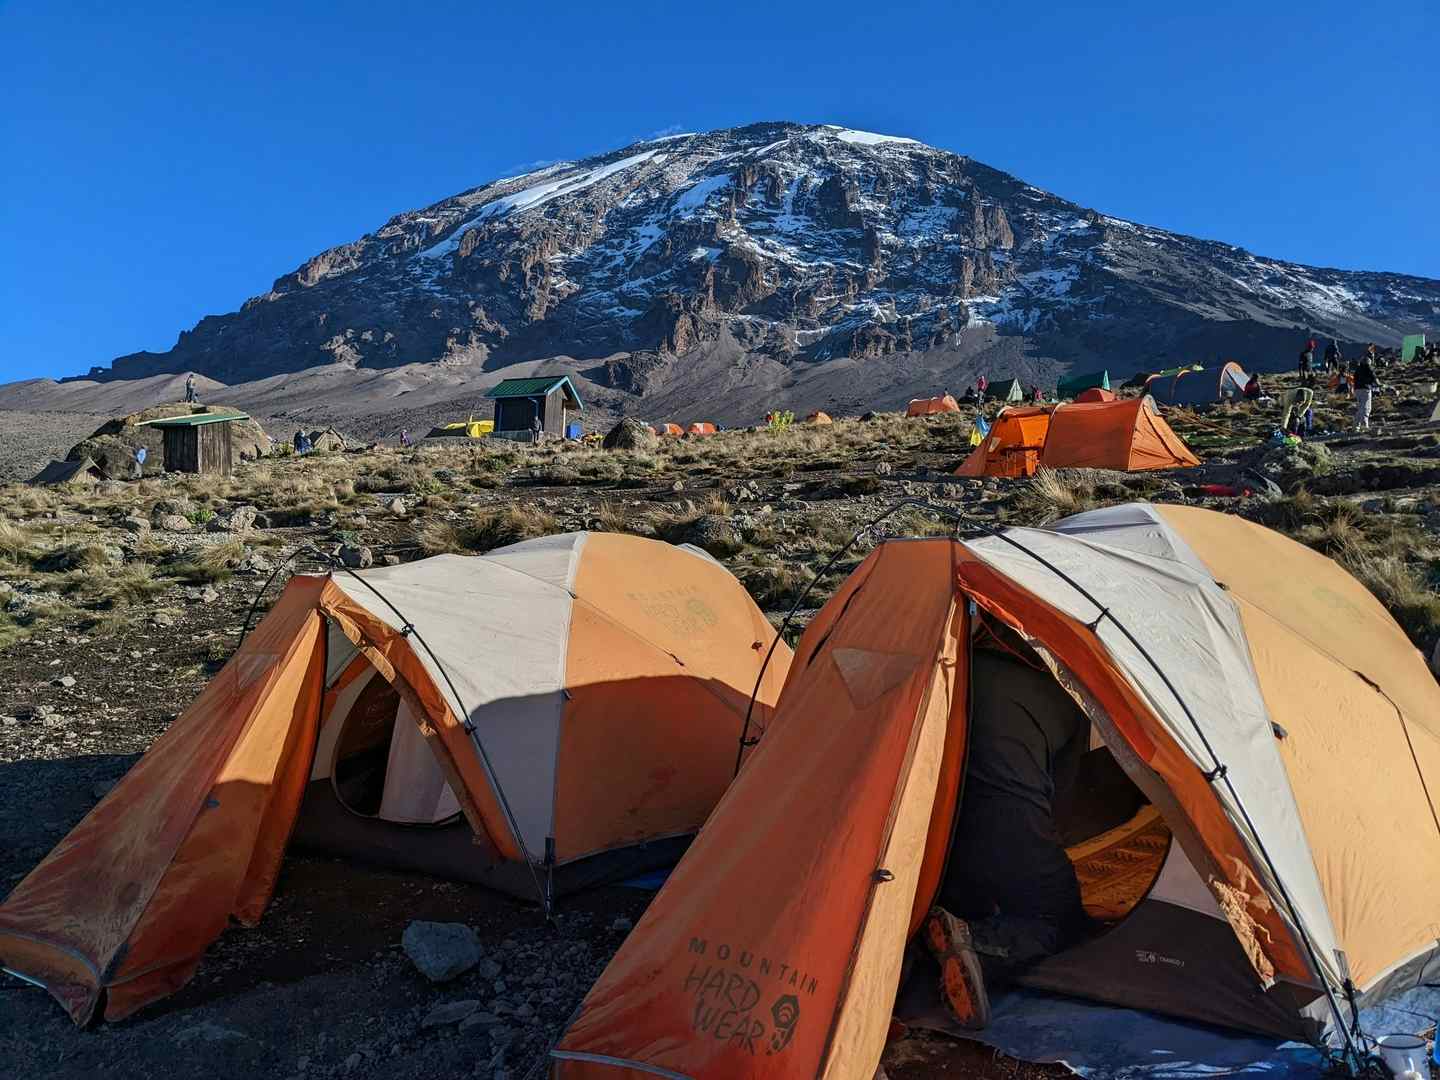 Climbing Mount Kilimanjaro is an experience...